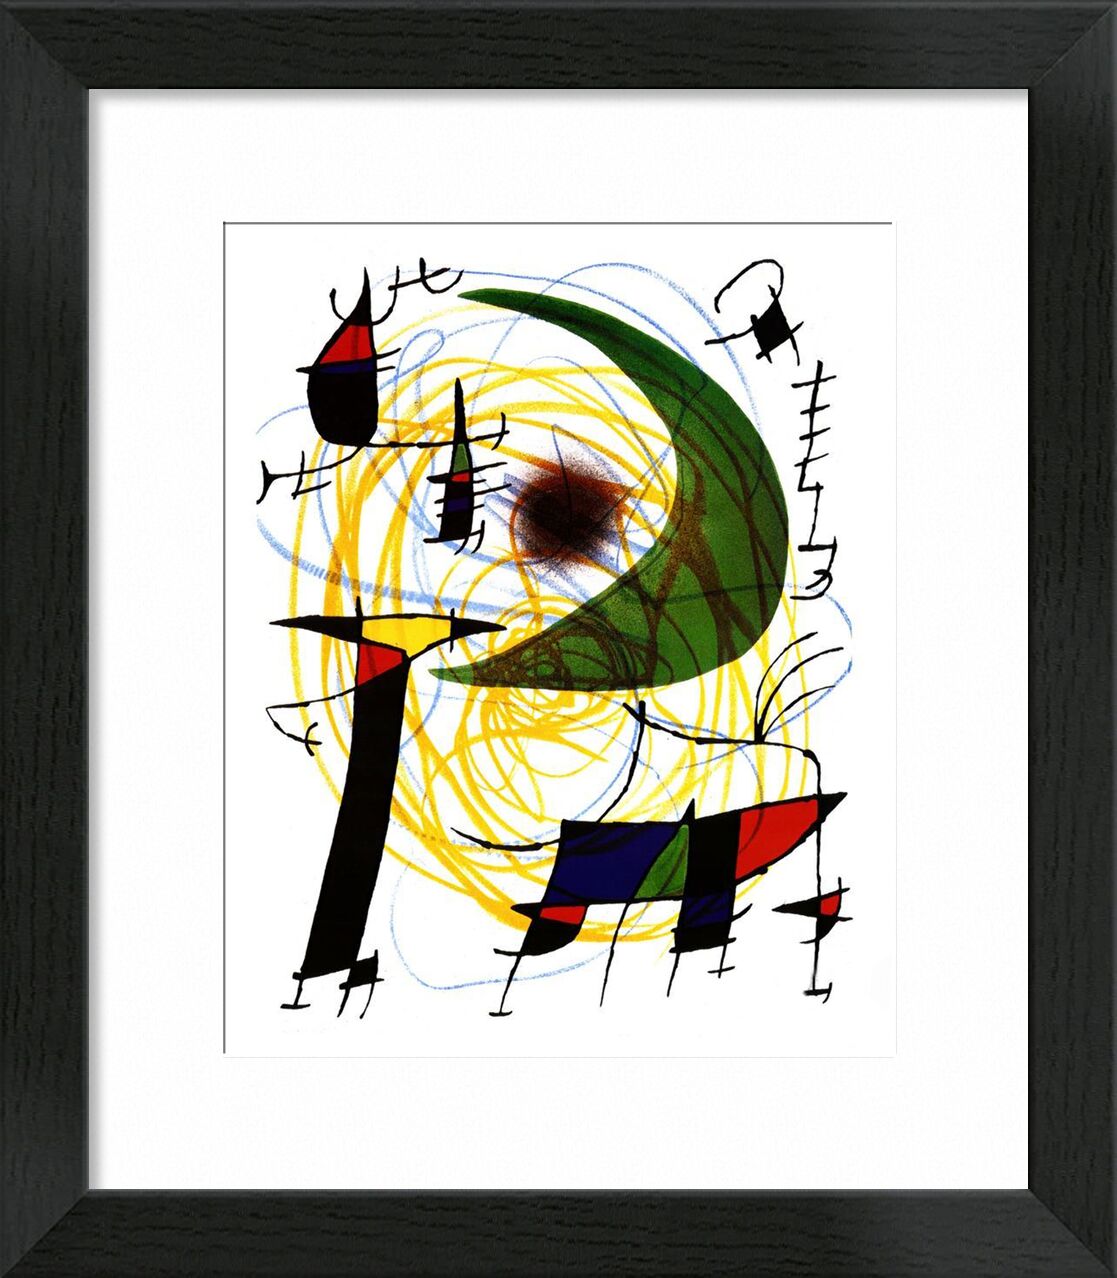 Green Moon - Joan Miró von Bildende Kunst, Prodi Art, Joan Miró, Malerei, abstrakt, Mond, grün, Buntstifte